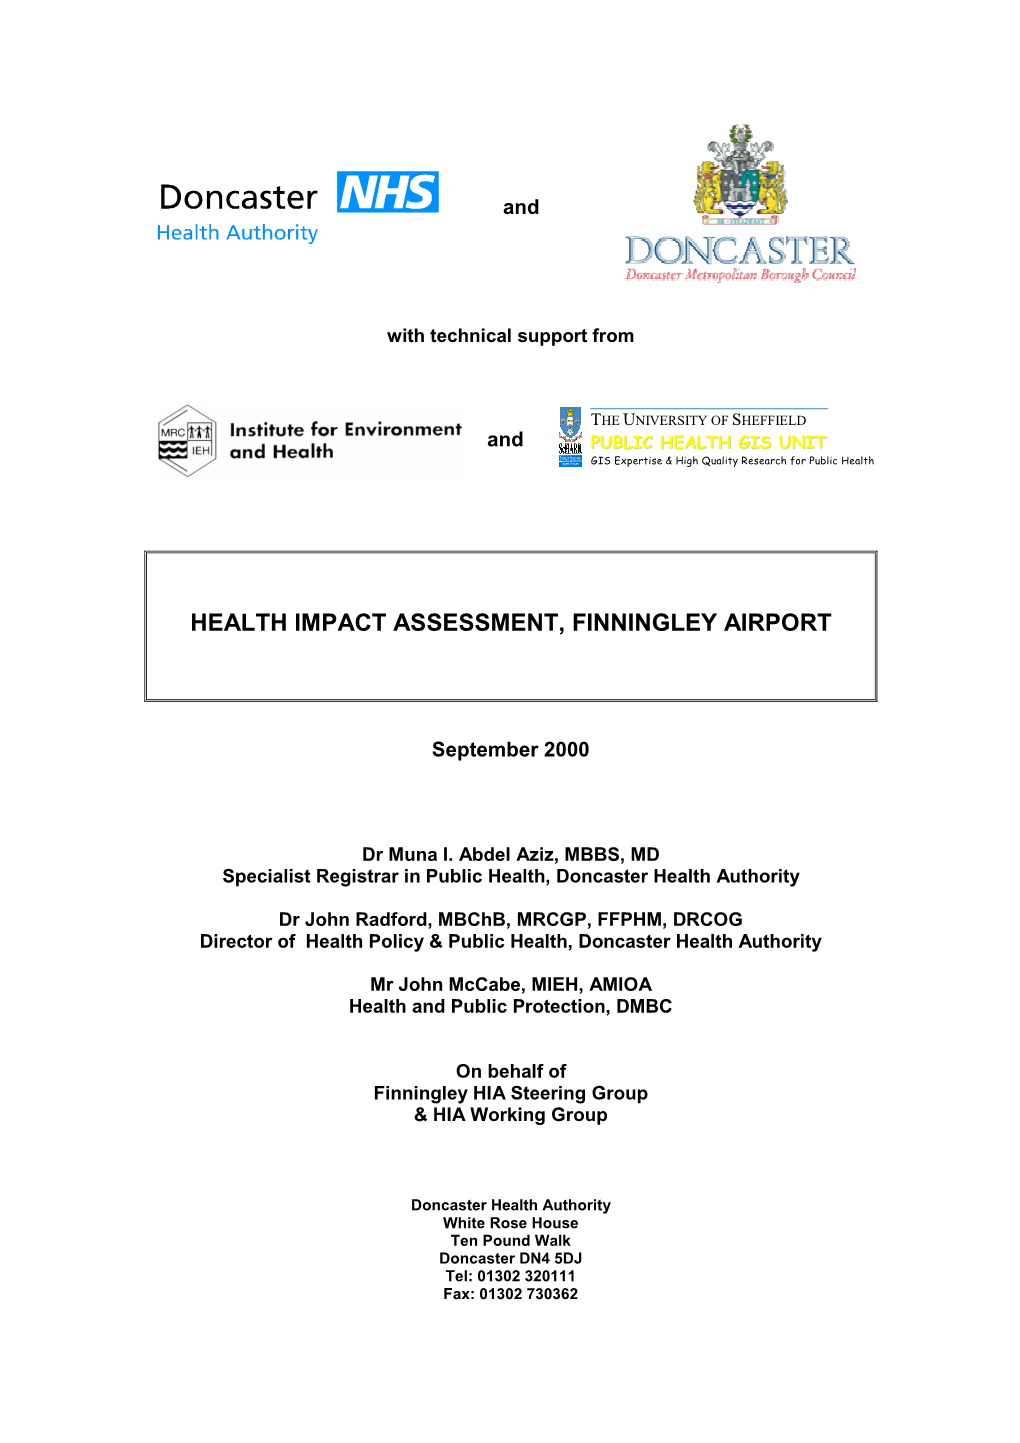 Health Impact Assessment, Finningley Airport